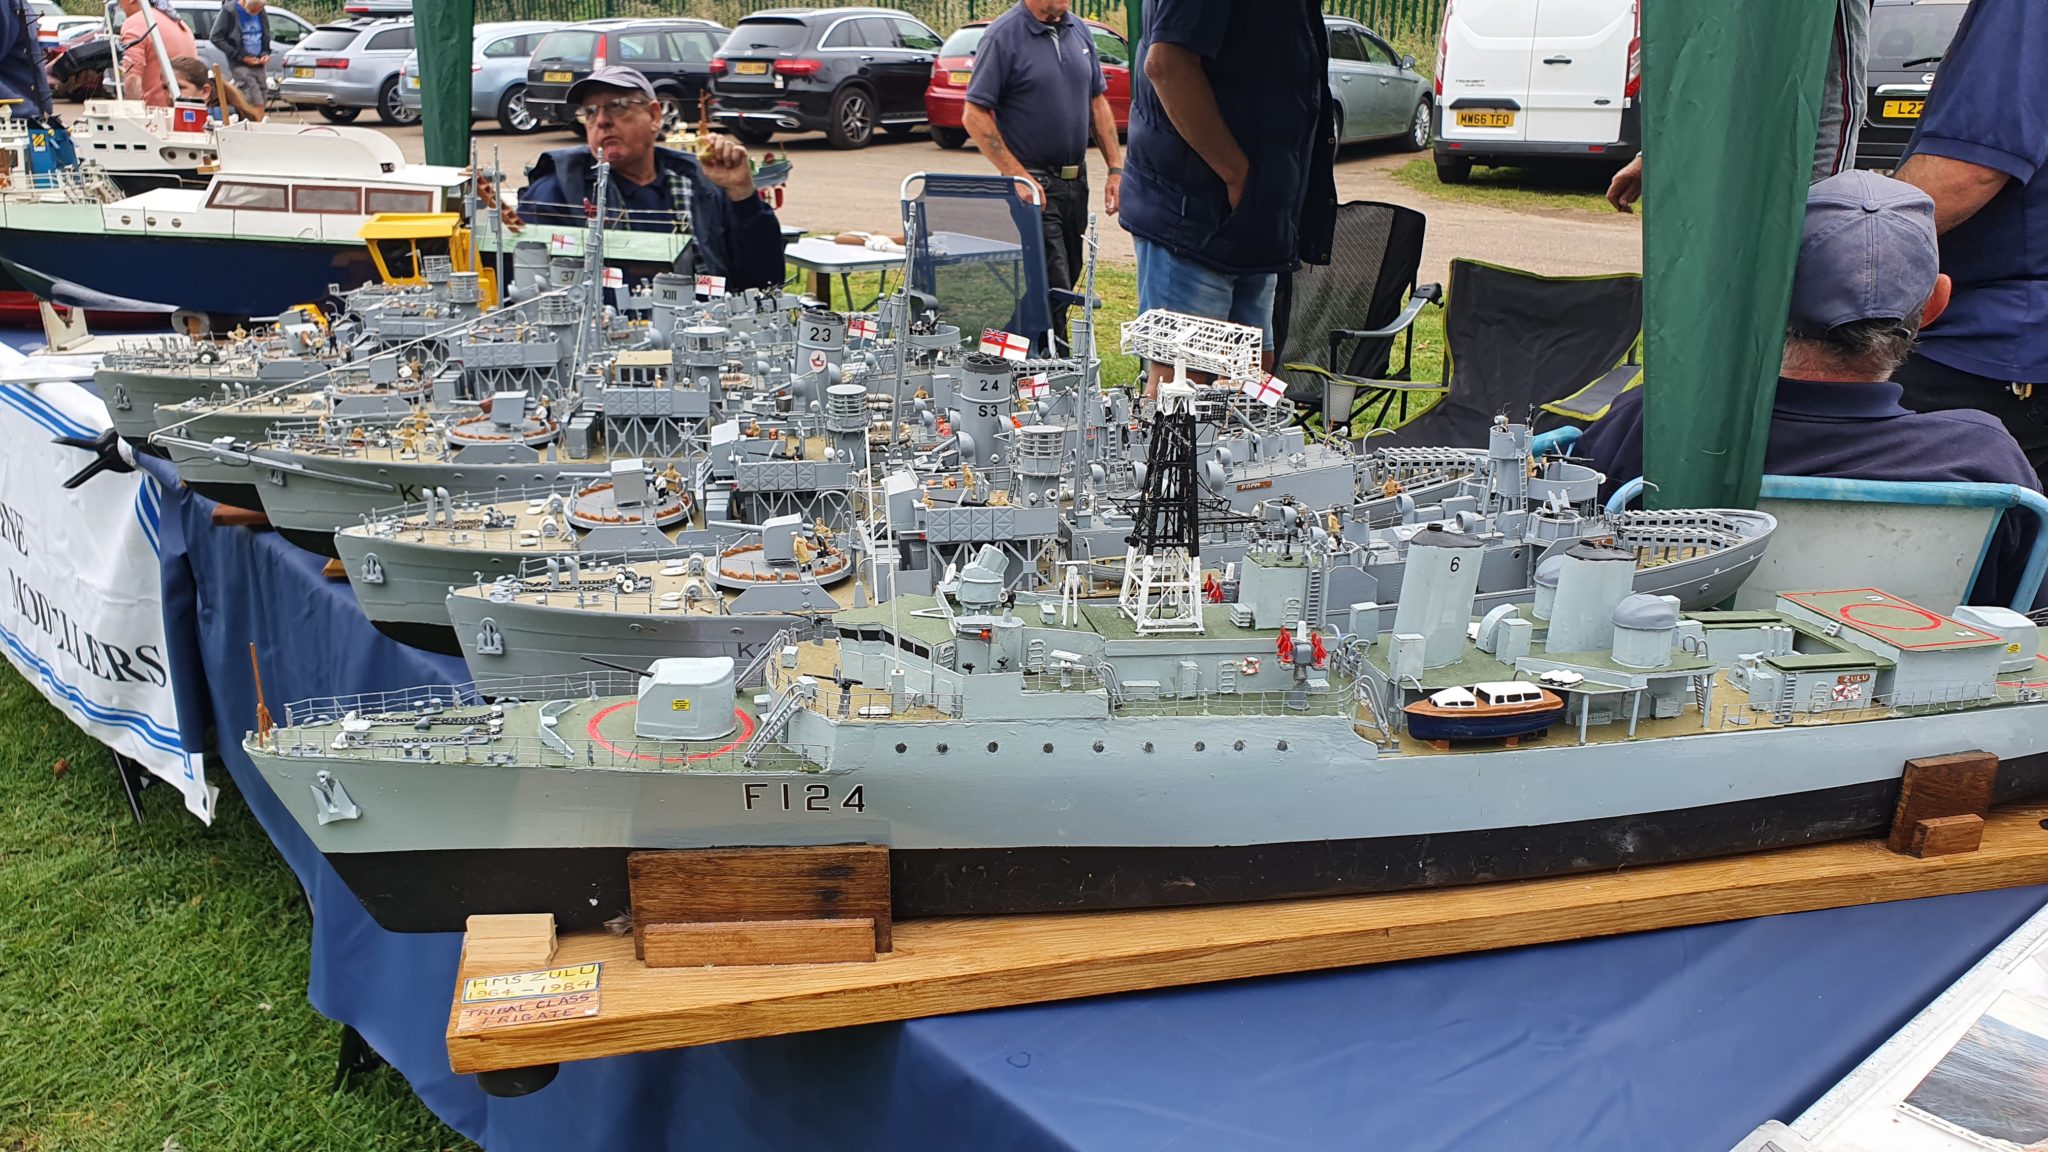 Sirmar Model Ships